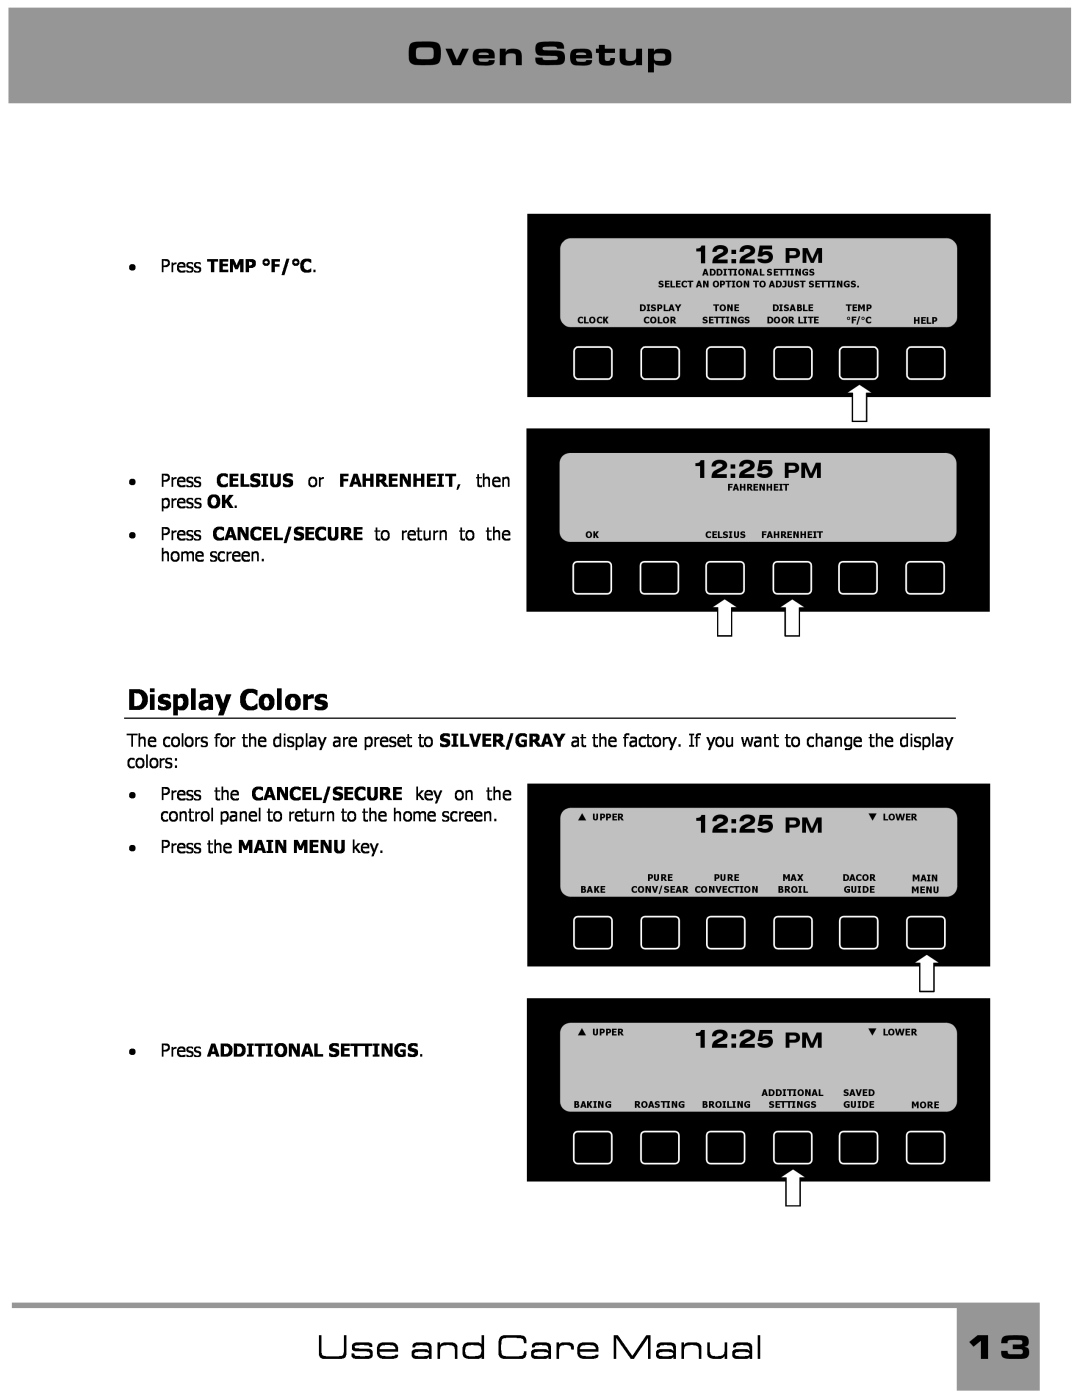 Dacor Wall Oven manual Display Colors, Oven Setup, Use and Care Manual, 1225 PM, Press TEMP F/C, Press ADDITIONAL SETTINGS 